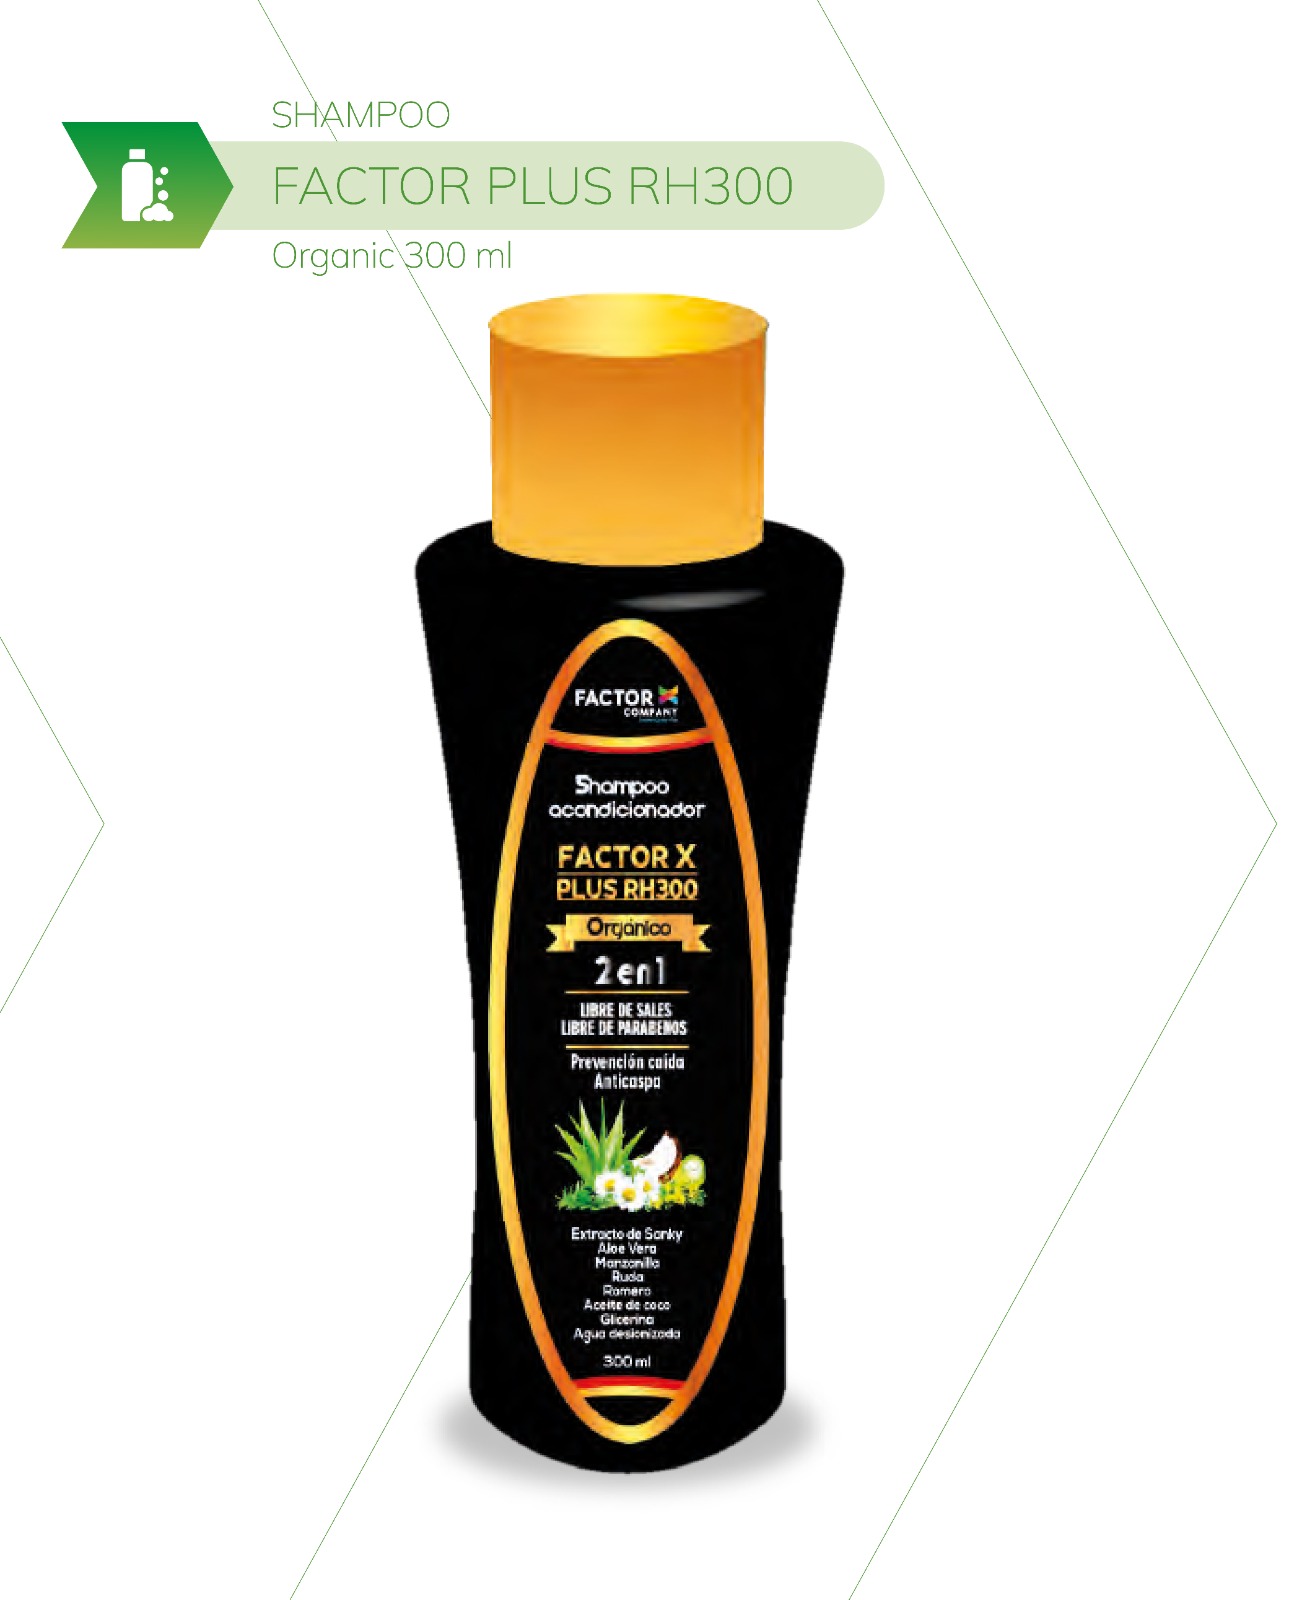 Shampoo Acondicionador Factor x Plus Rh300